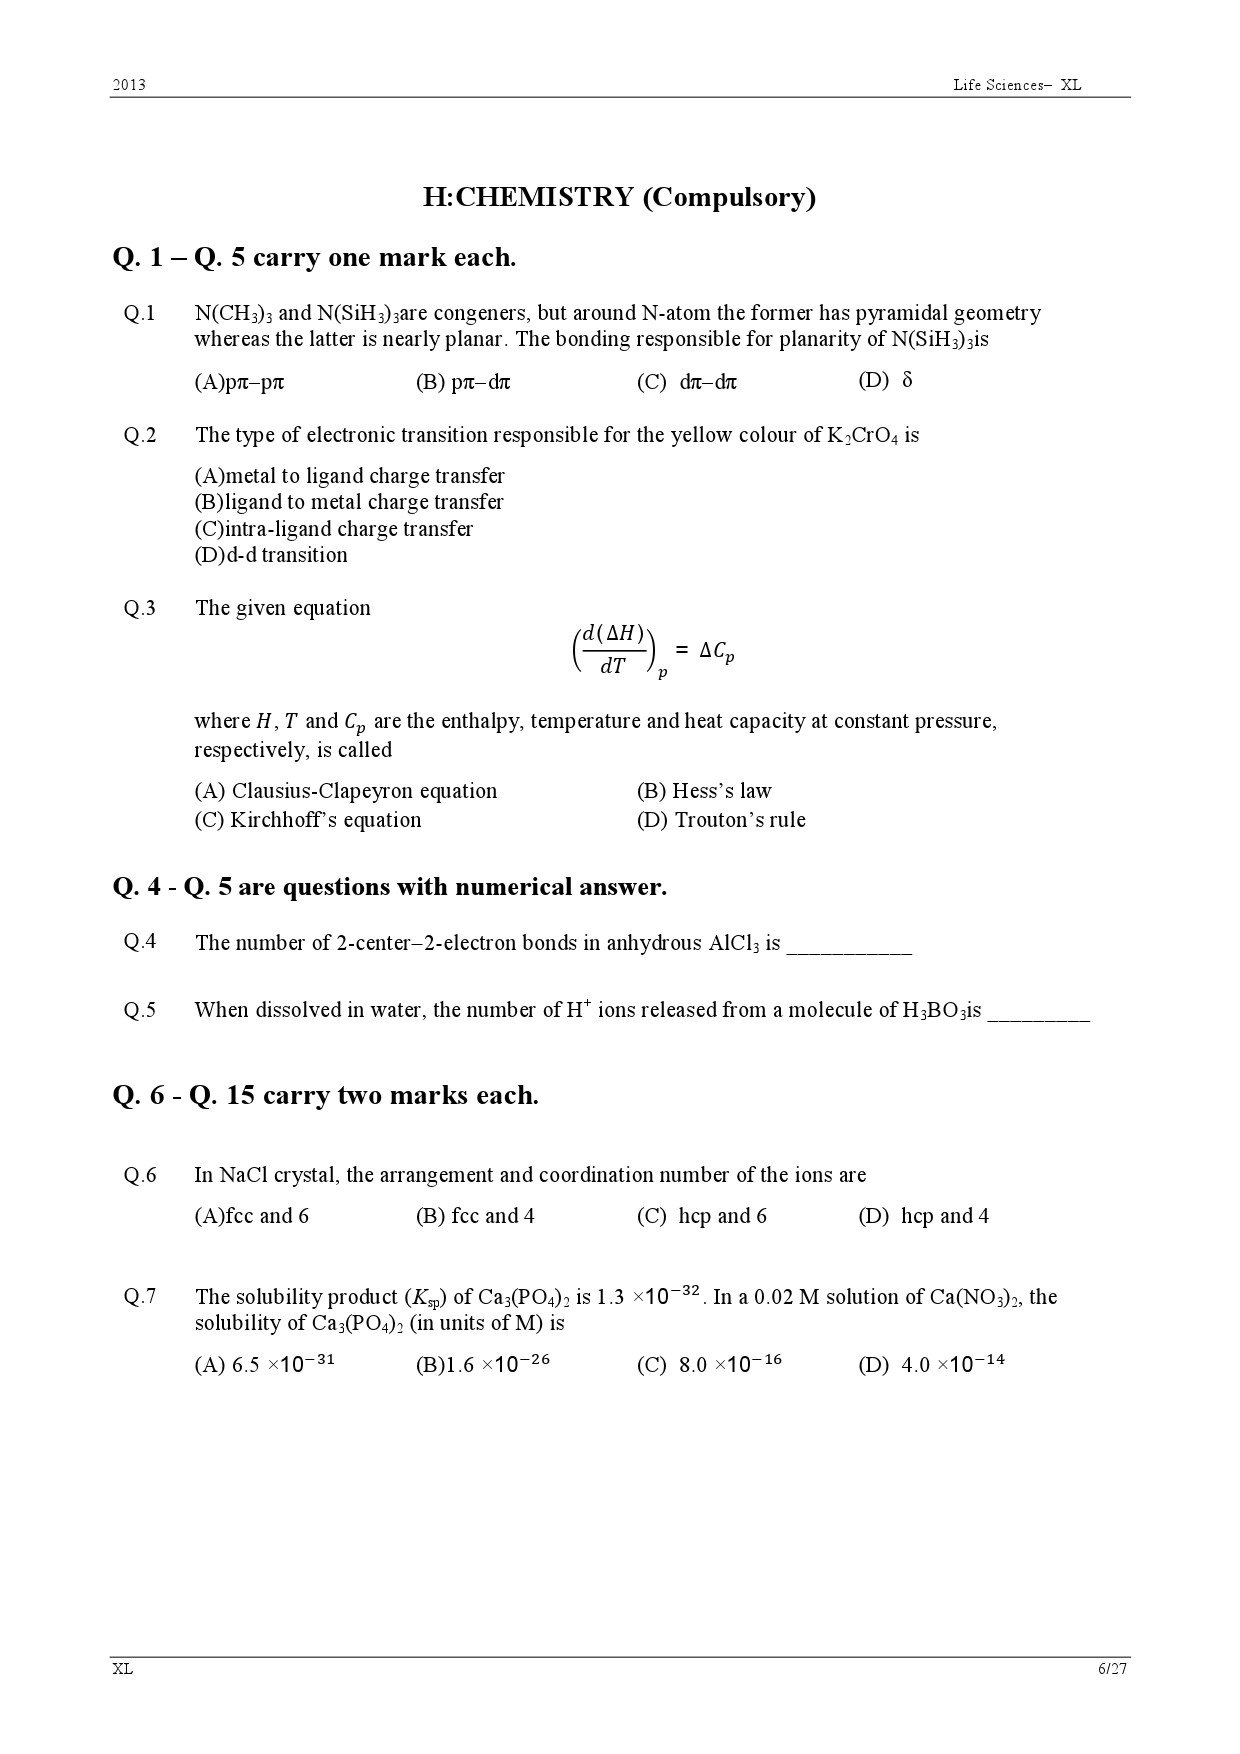 GATE Exam Question Paper 2013 Life Sciences 6